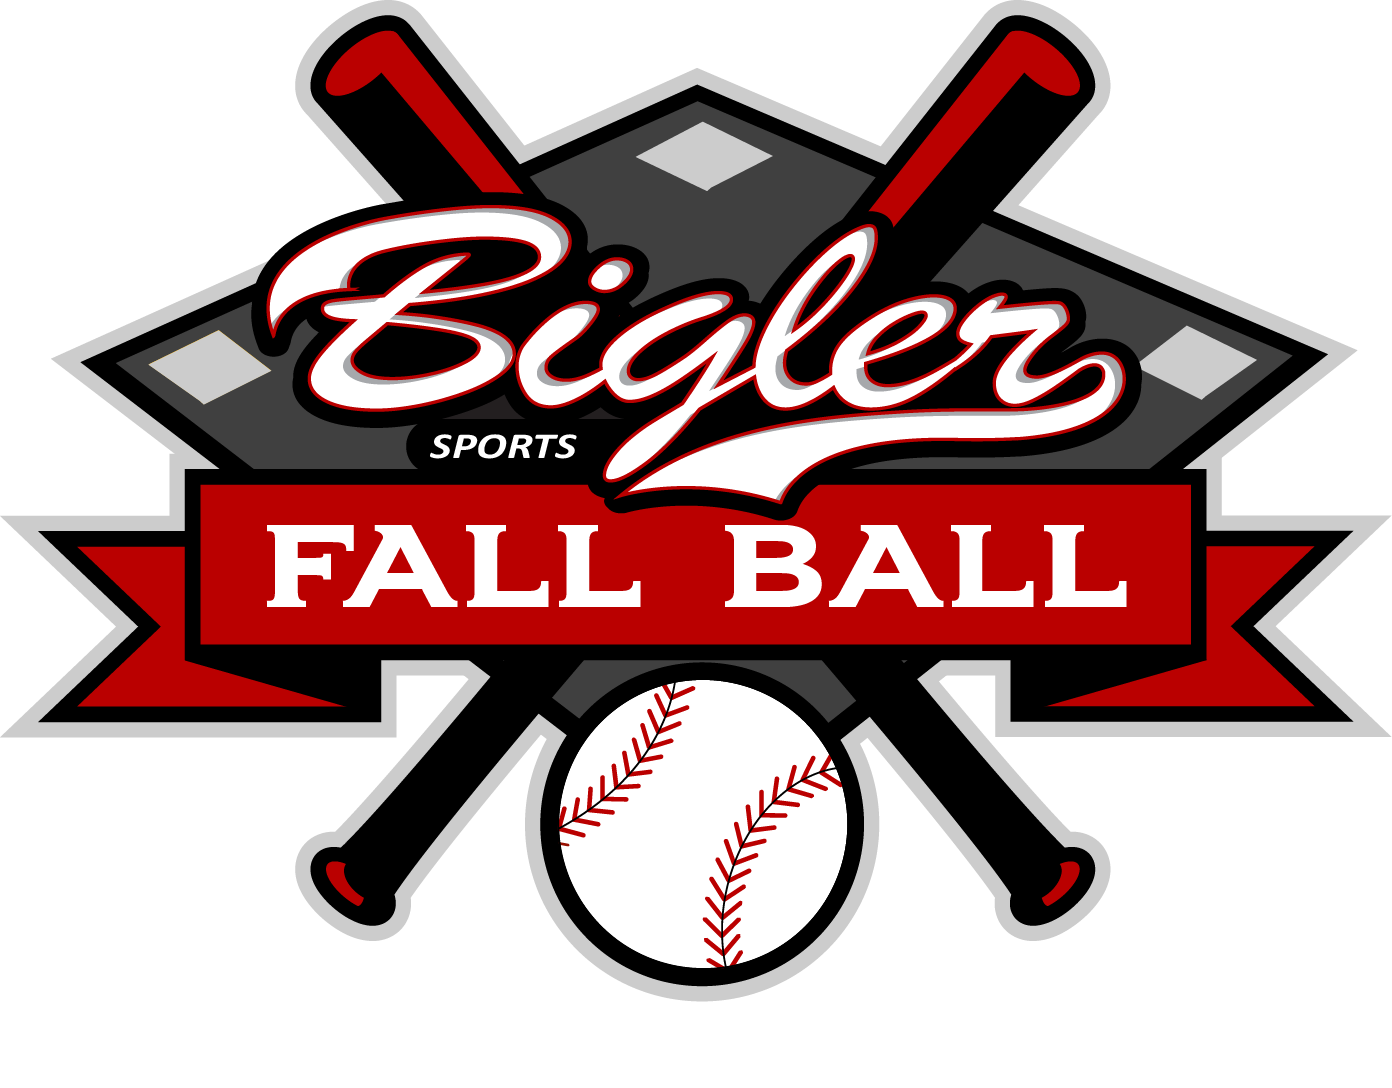 Fall Ball - Bigler Sports